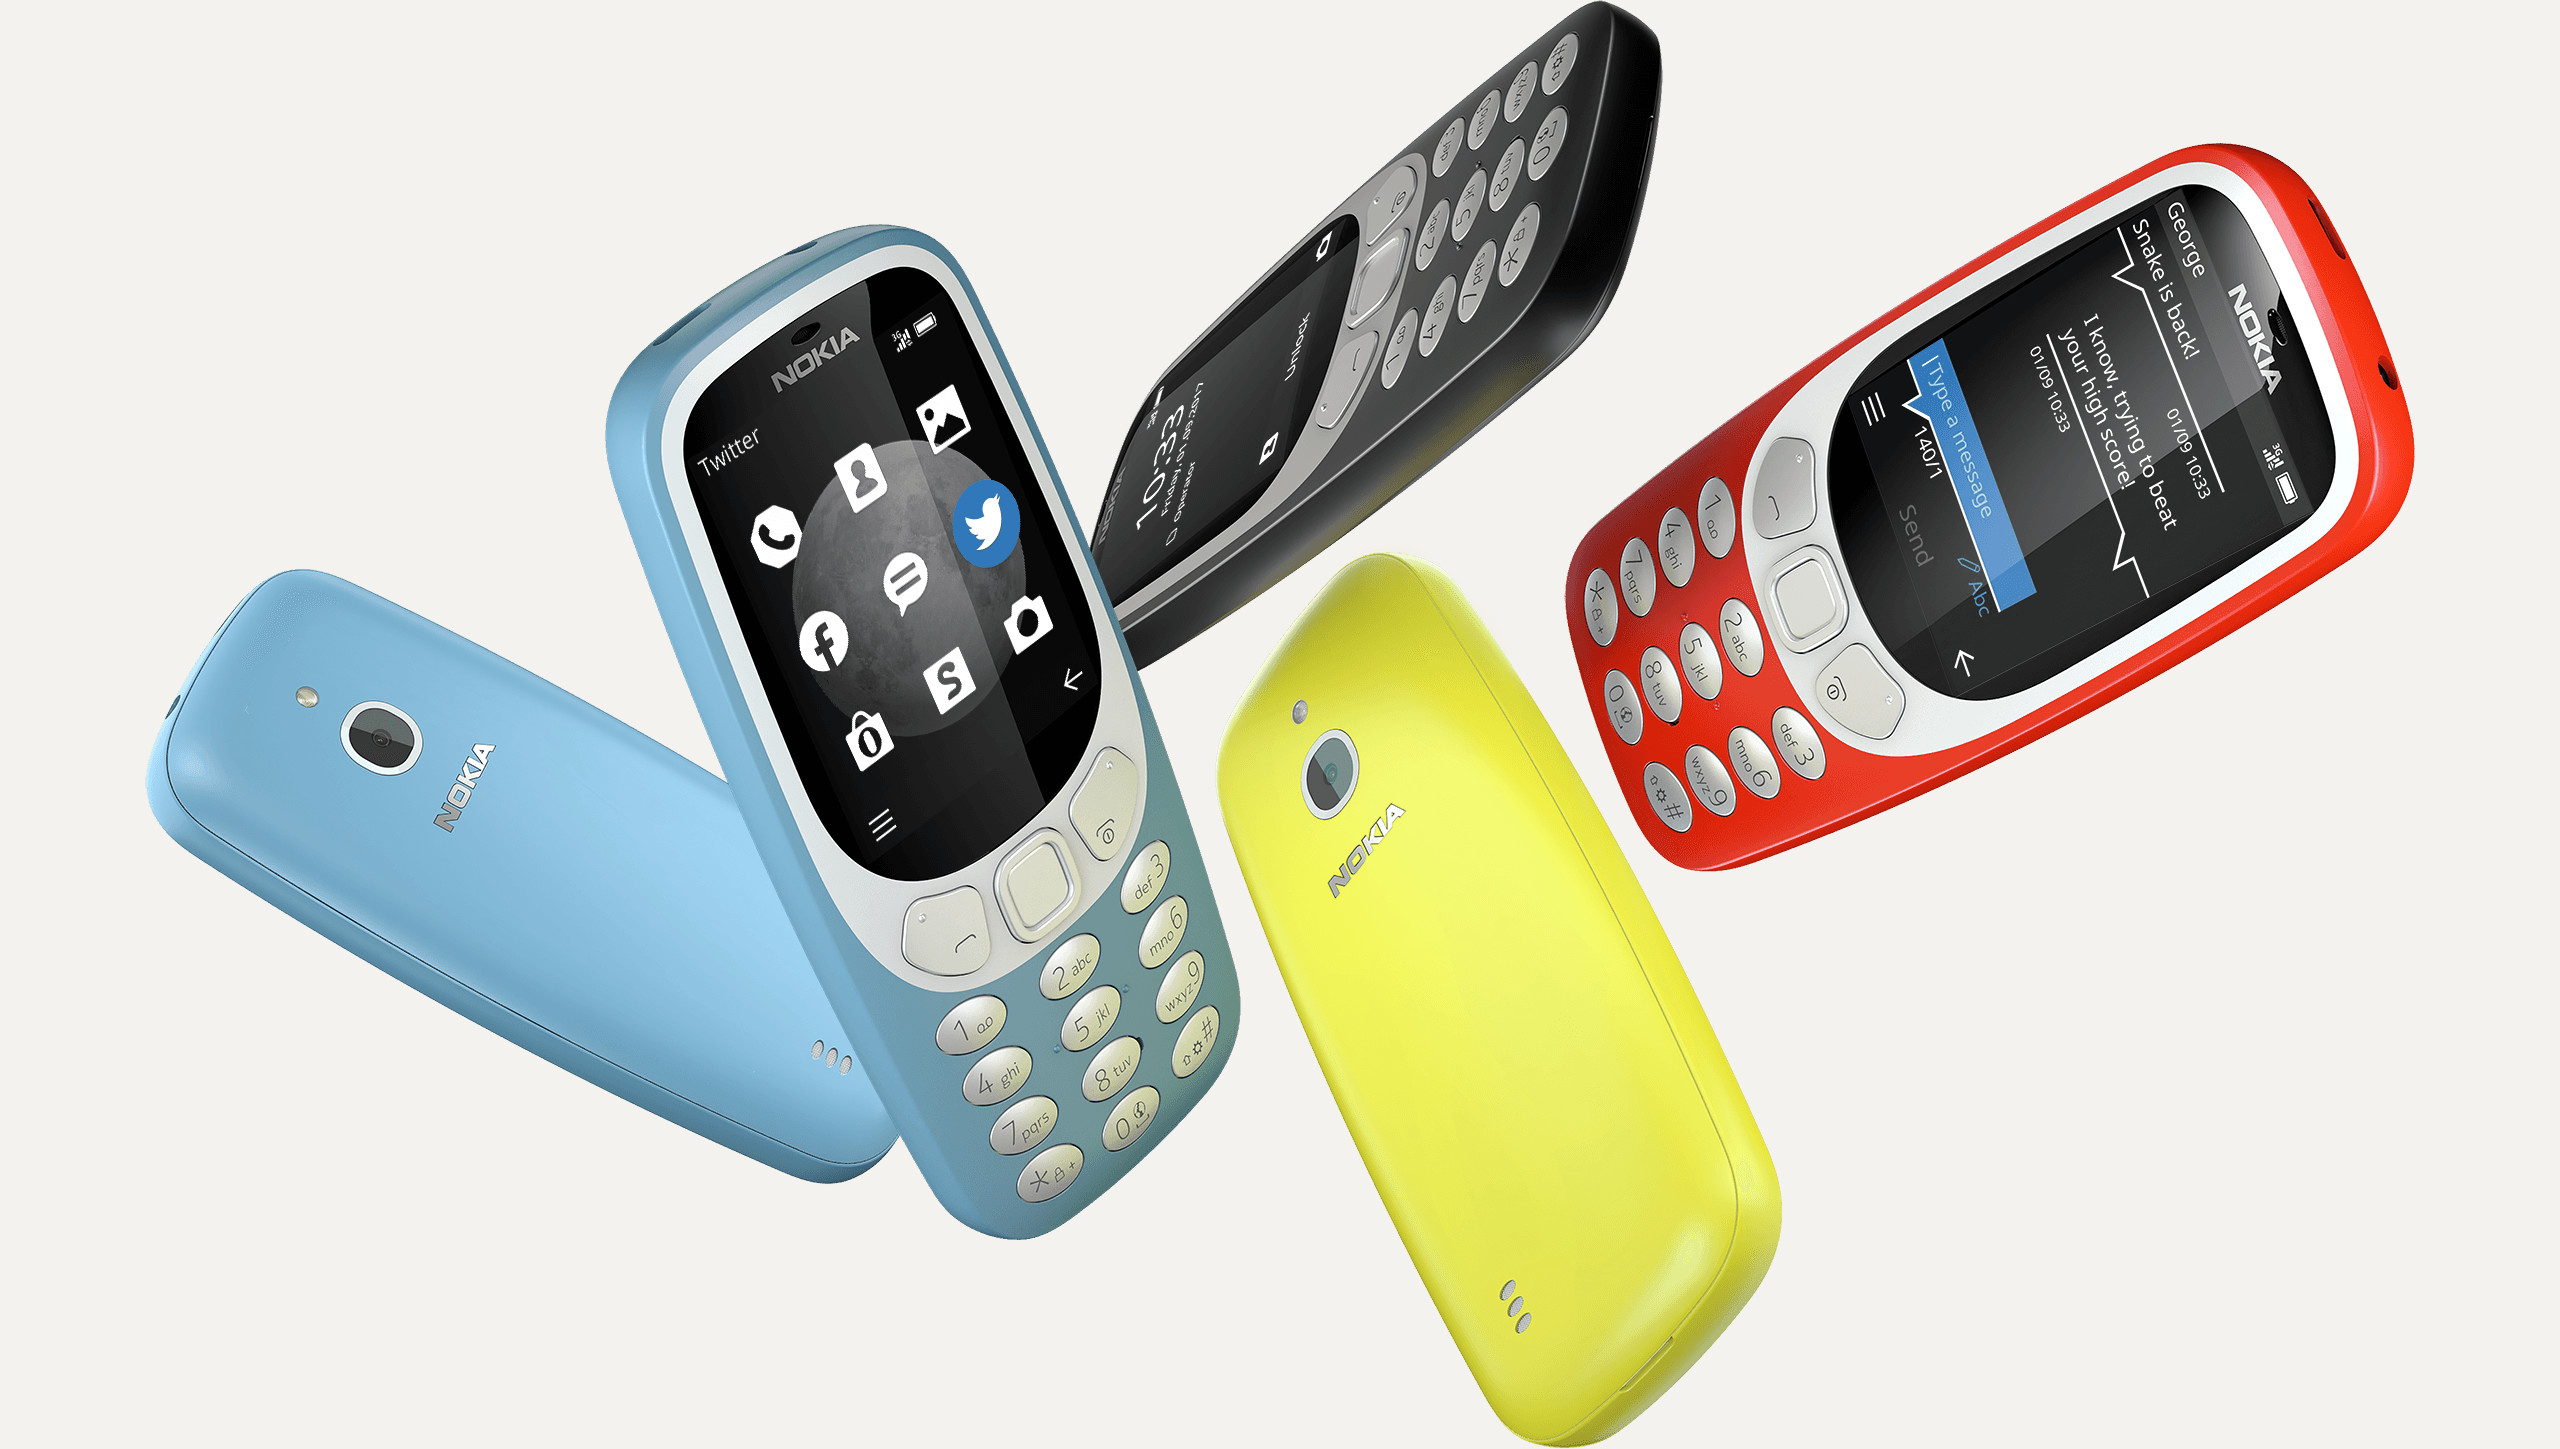 Nokia 3310 3g Price In Pakistan Home Shopping